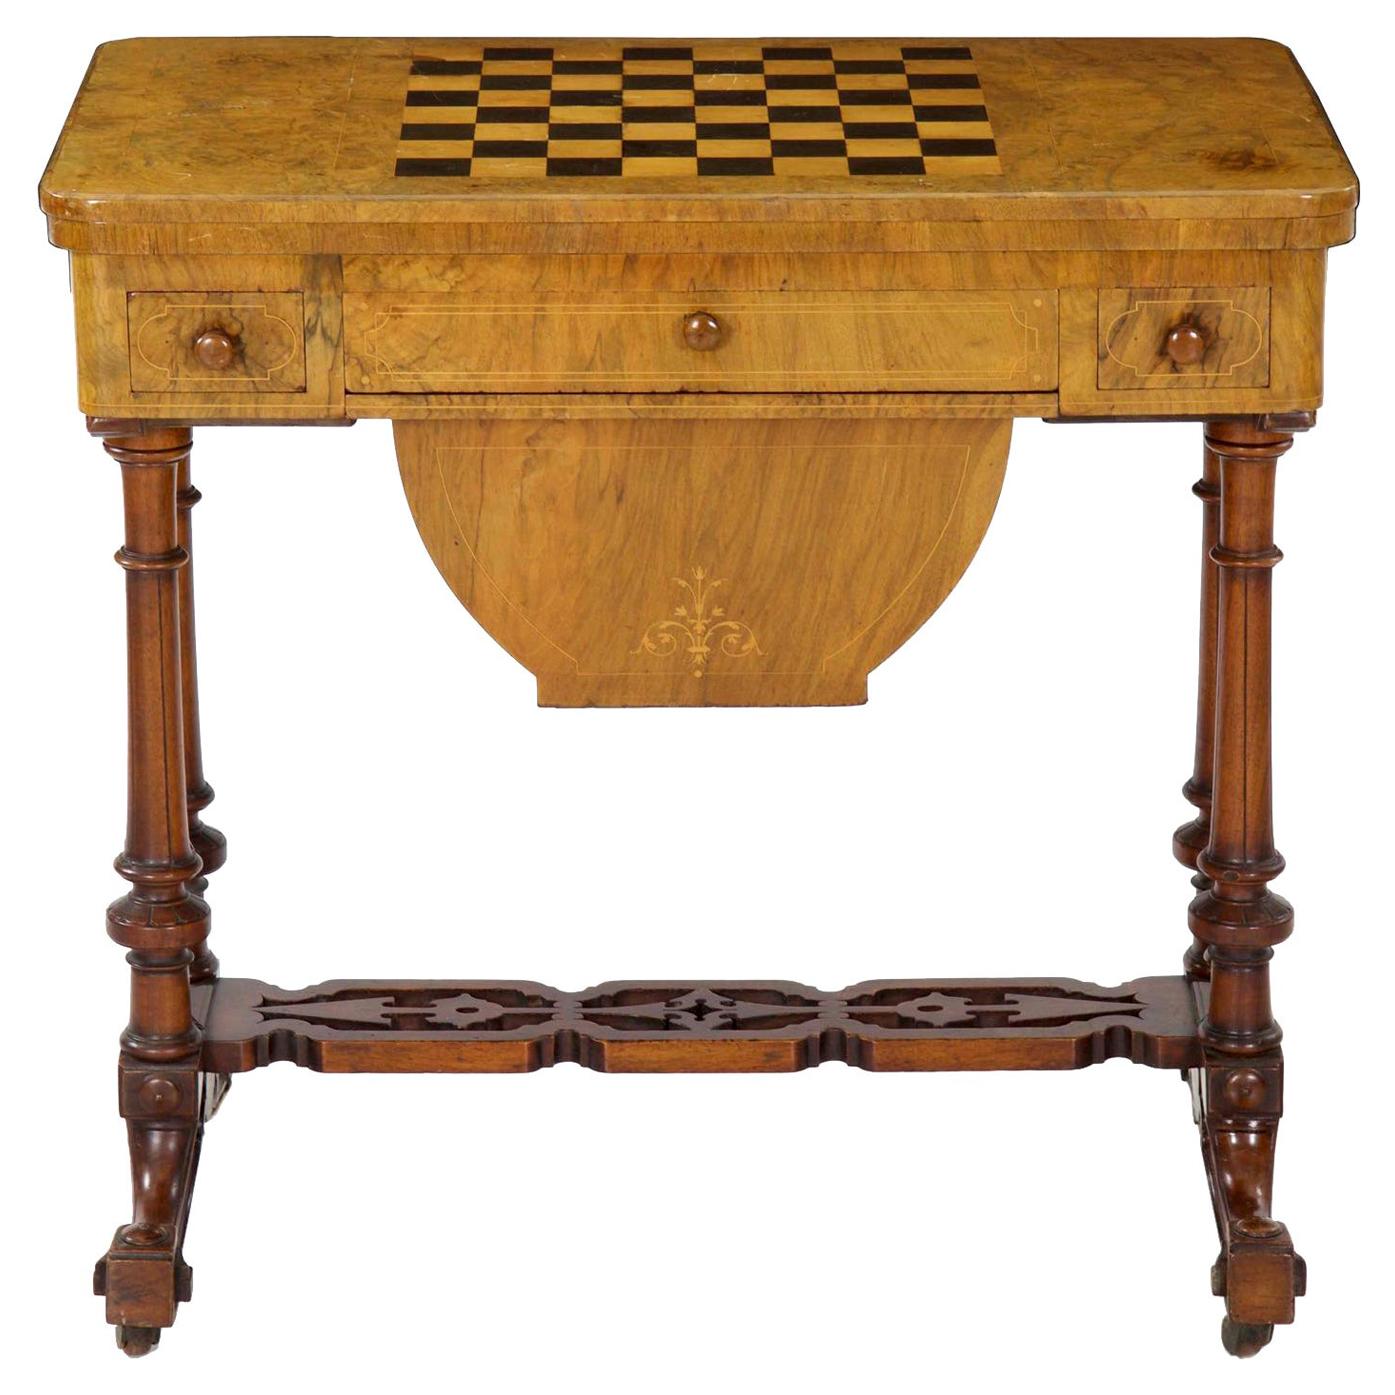 Antique Victorian Flip Top Figured Walnut Games & Work Table, circa 1860-1880